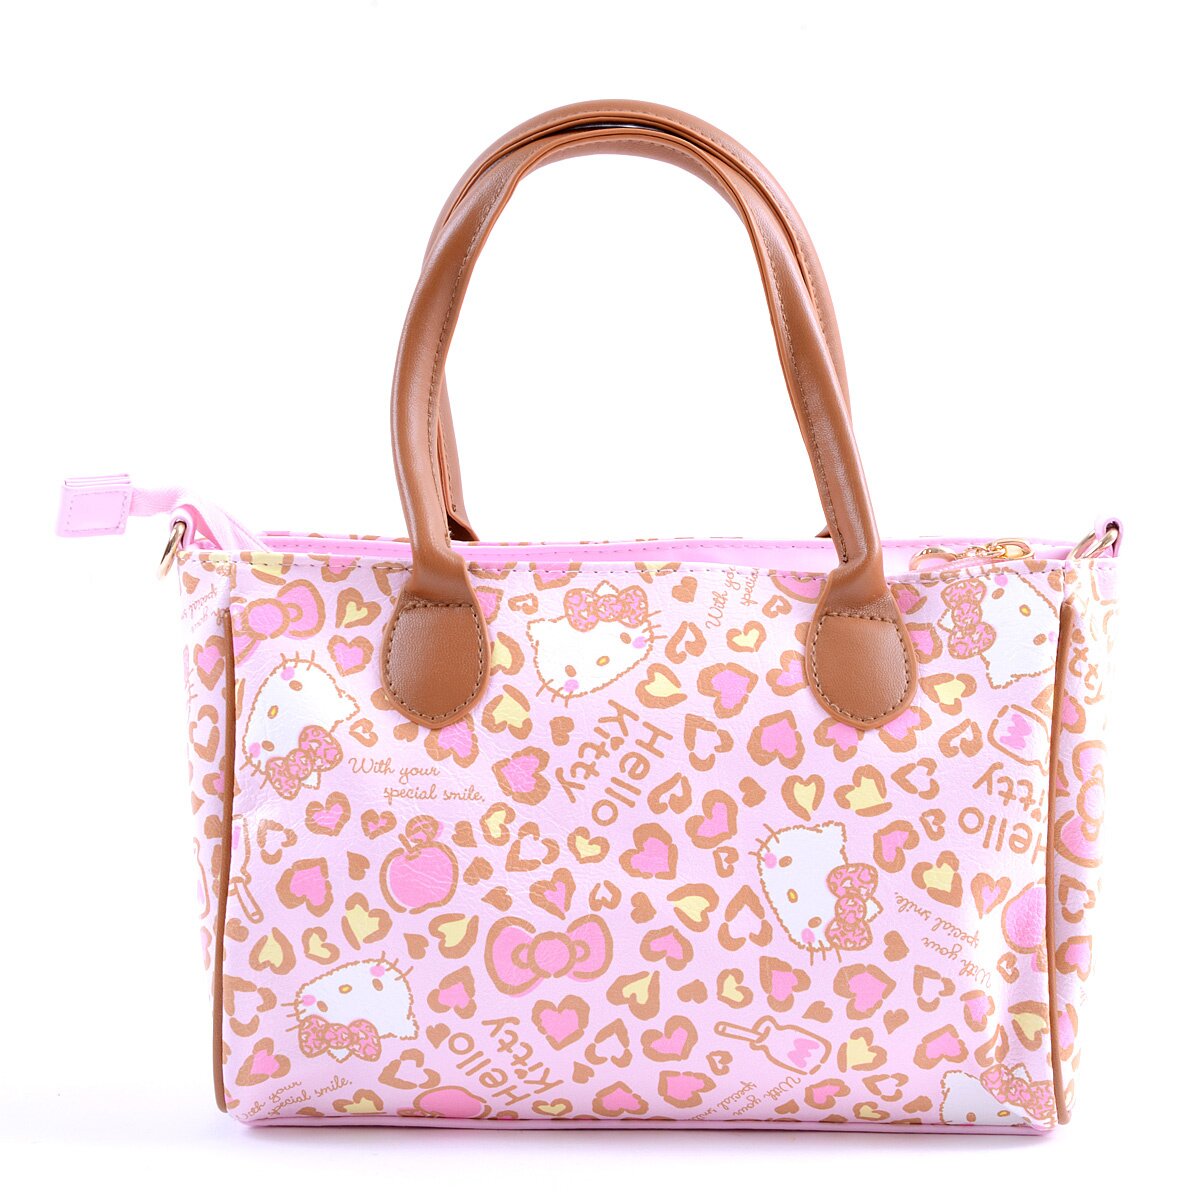 Hello kitty purse - Women's handbags